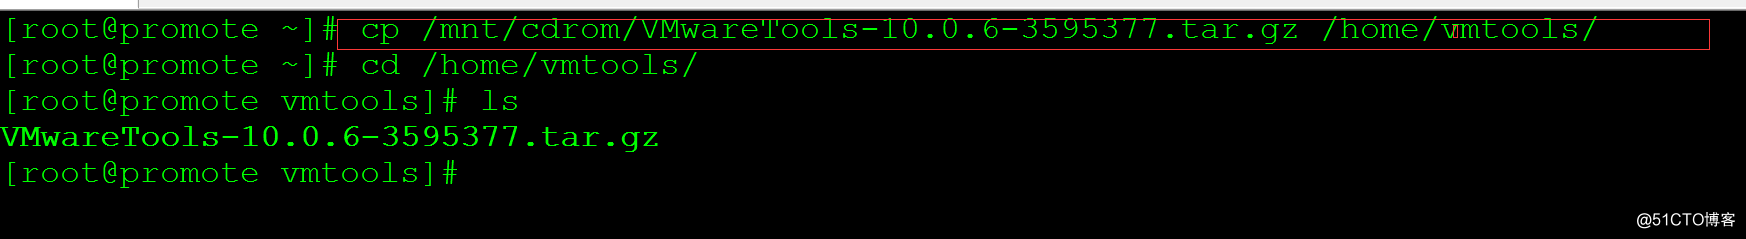 Centos7 在vmware上配置vm-tools